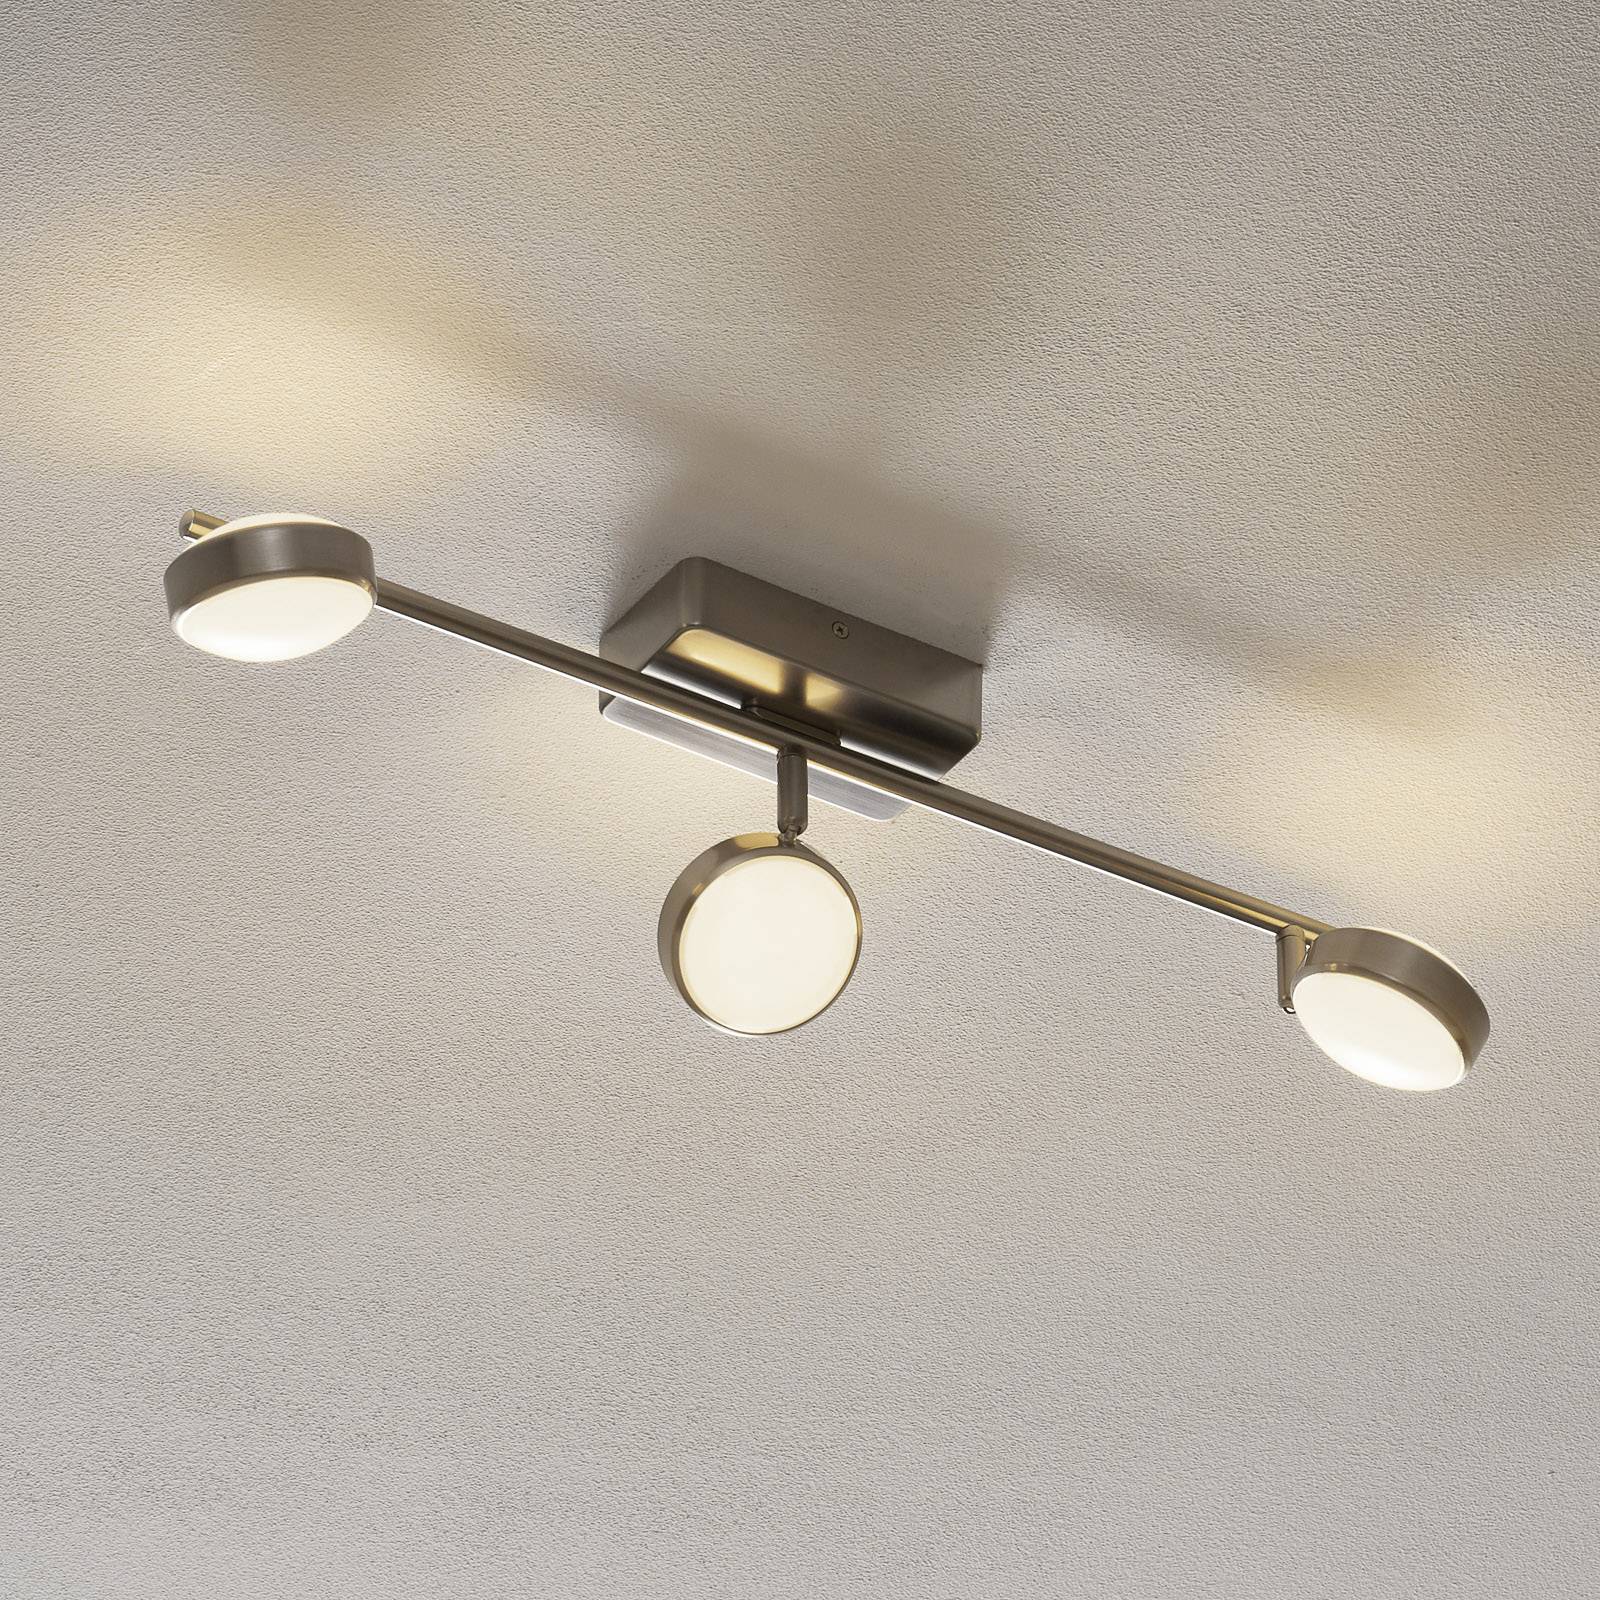 Image of EGLO connect Corropoli-C spot plafond LED 3 lampes 9002759977160